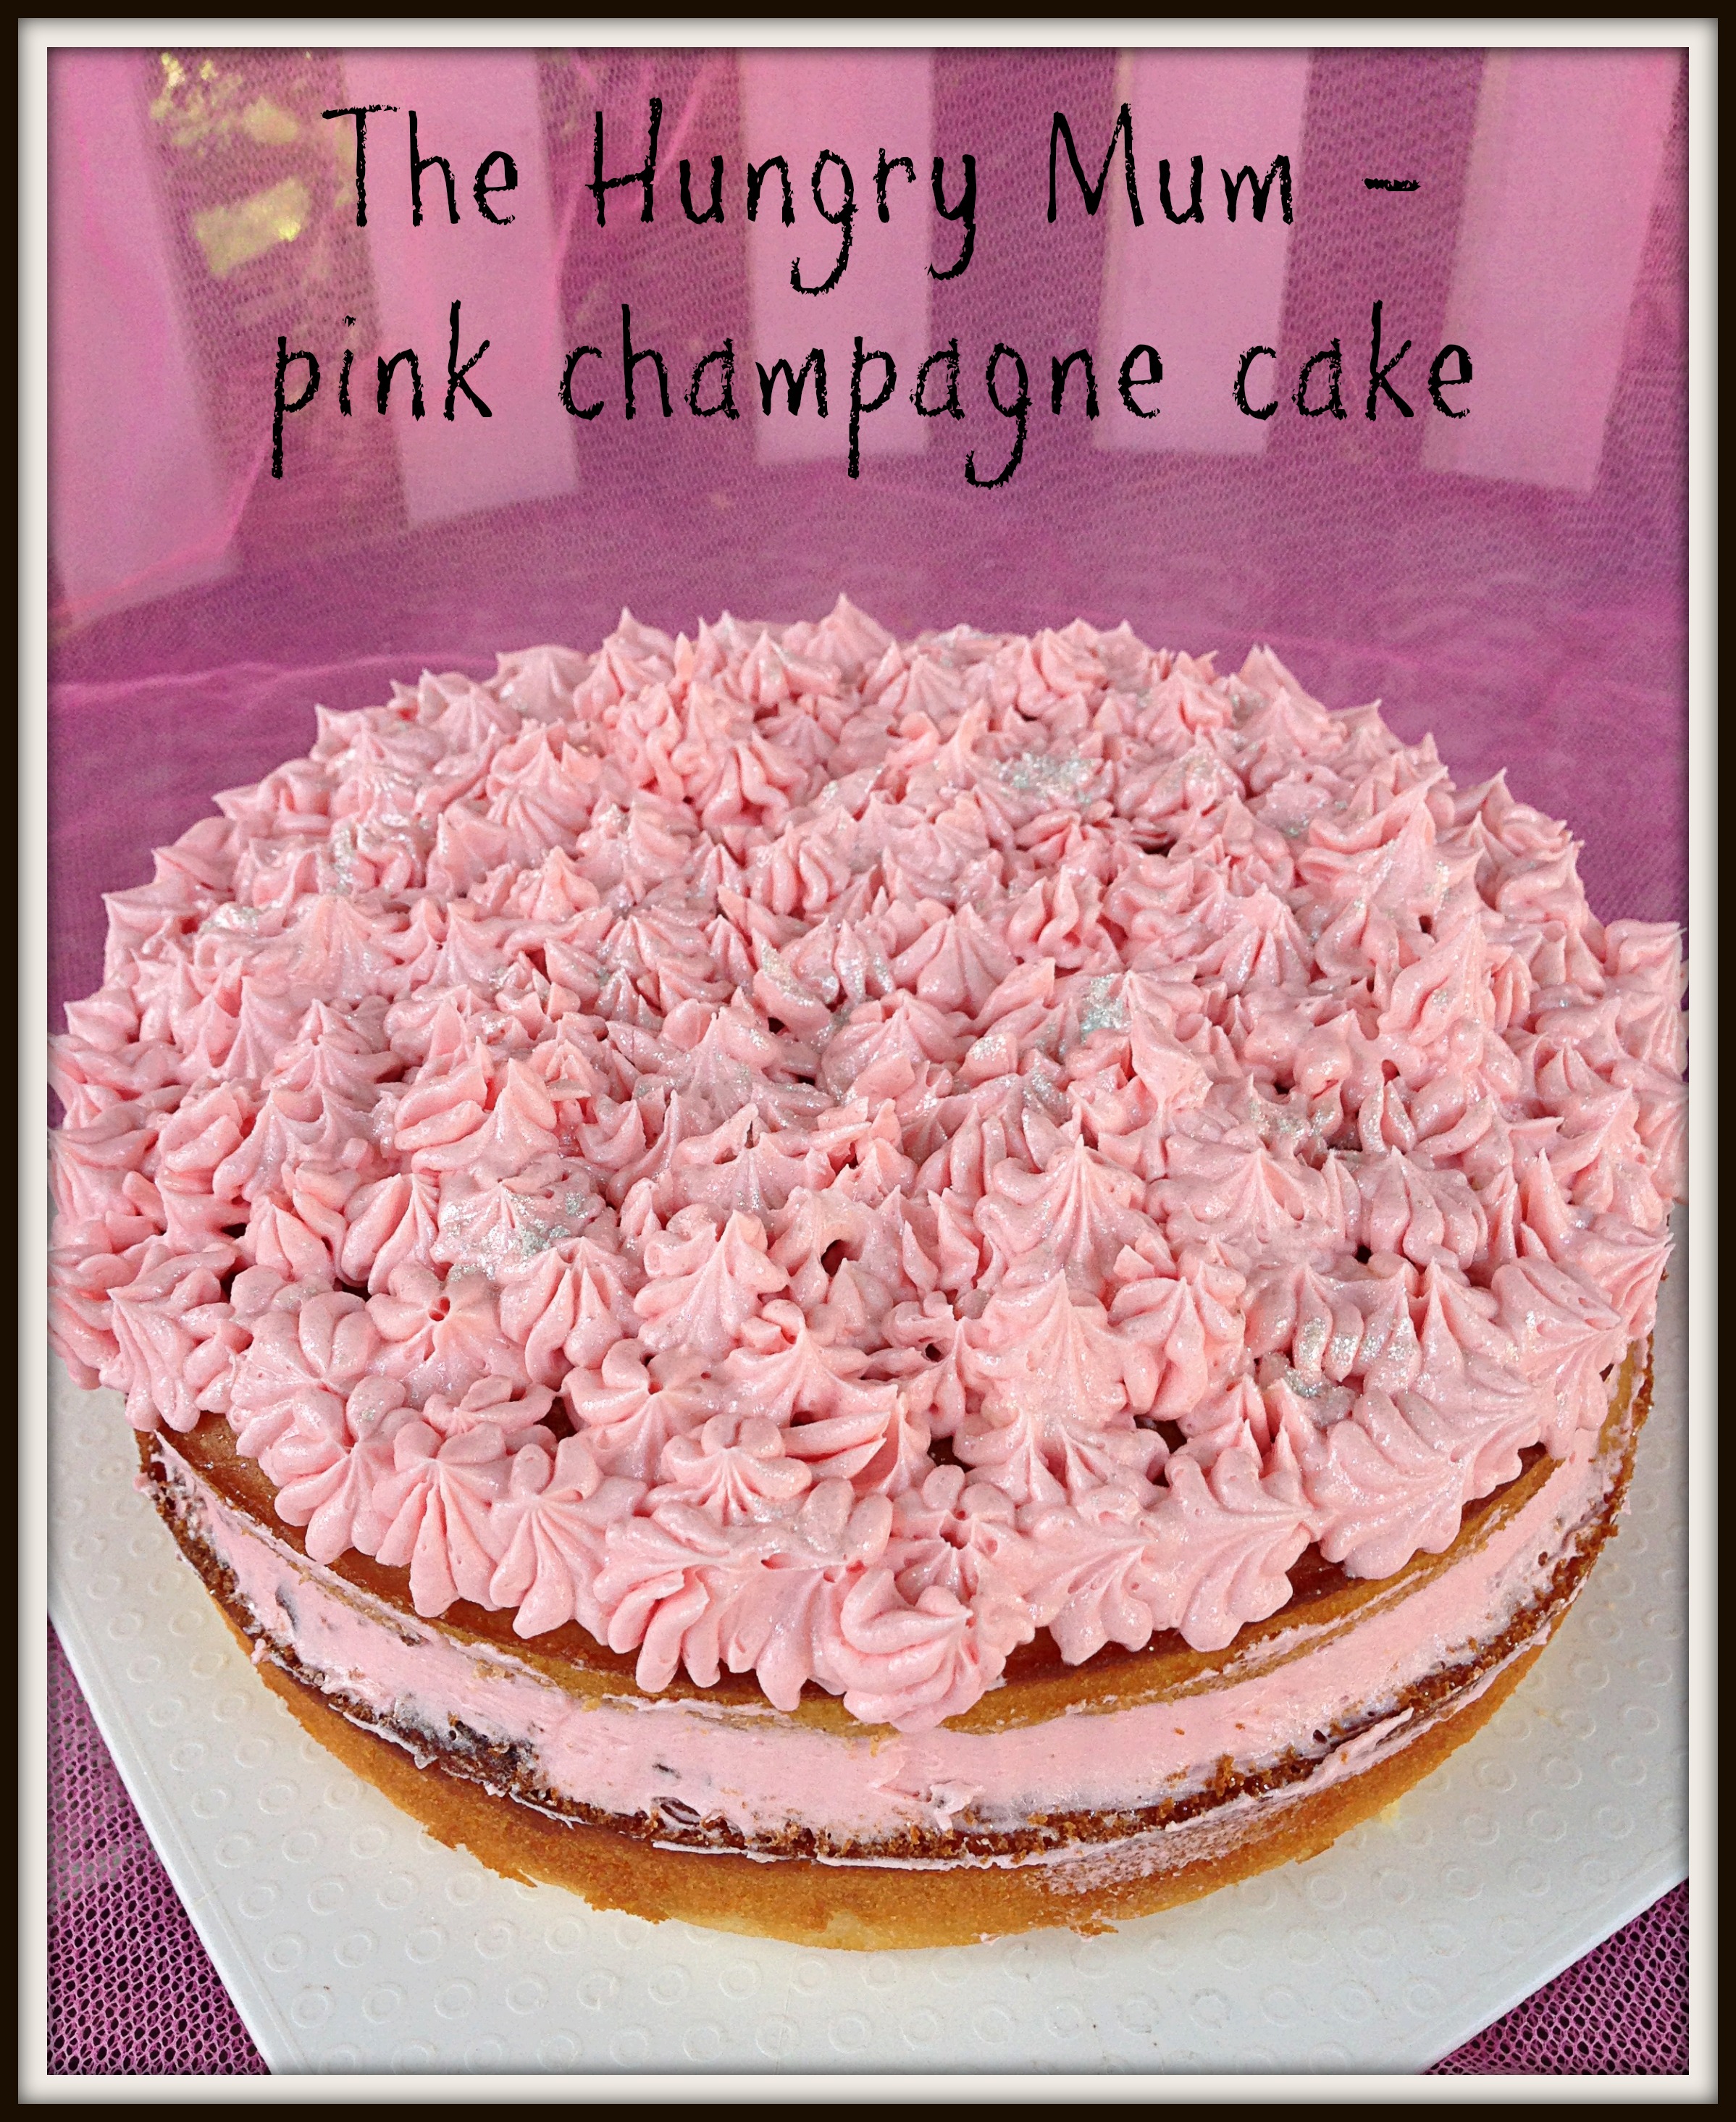 pink champagne cake recipe uk